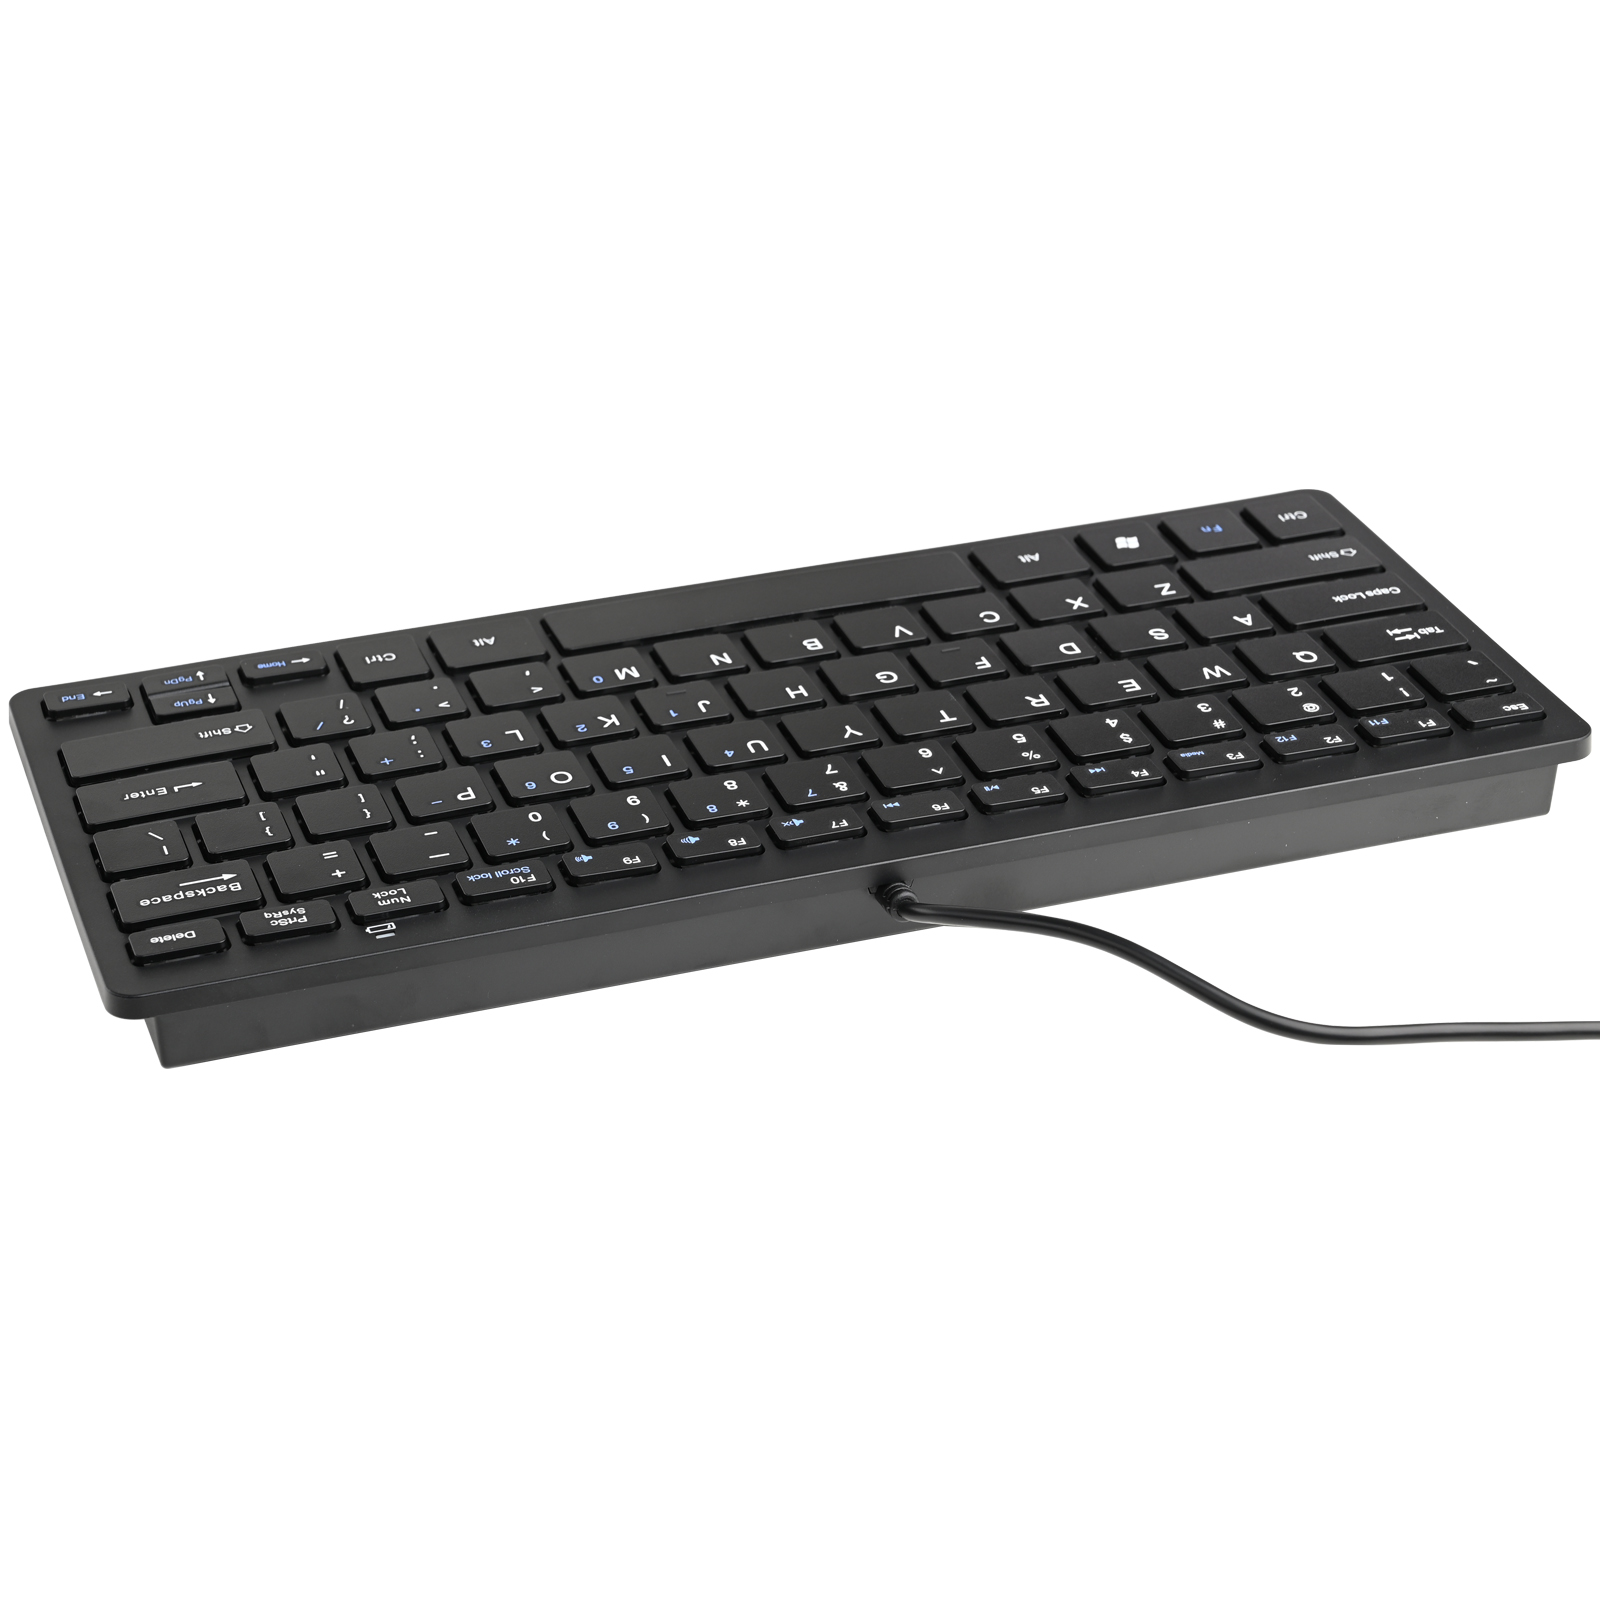 2 in1 USB-C Ultra Slim 78 Scissor Keys Compact Wired Keyboard